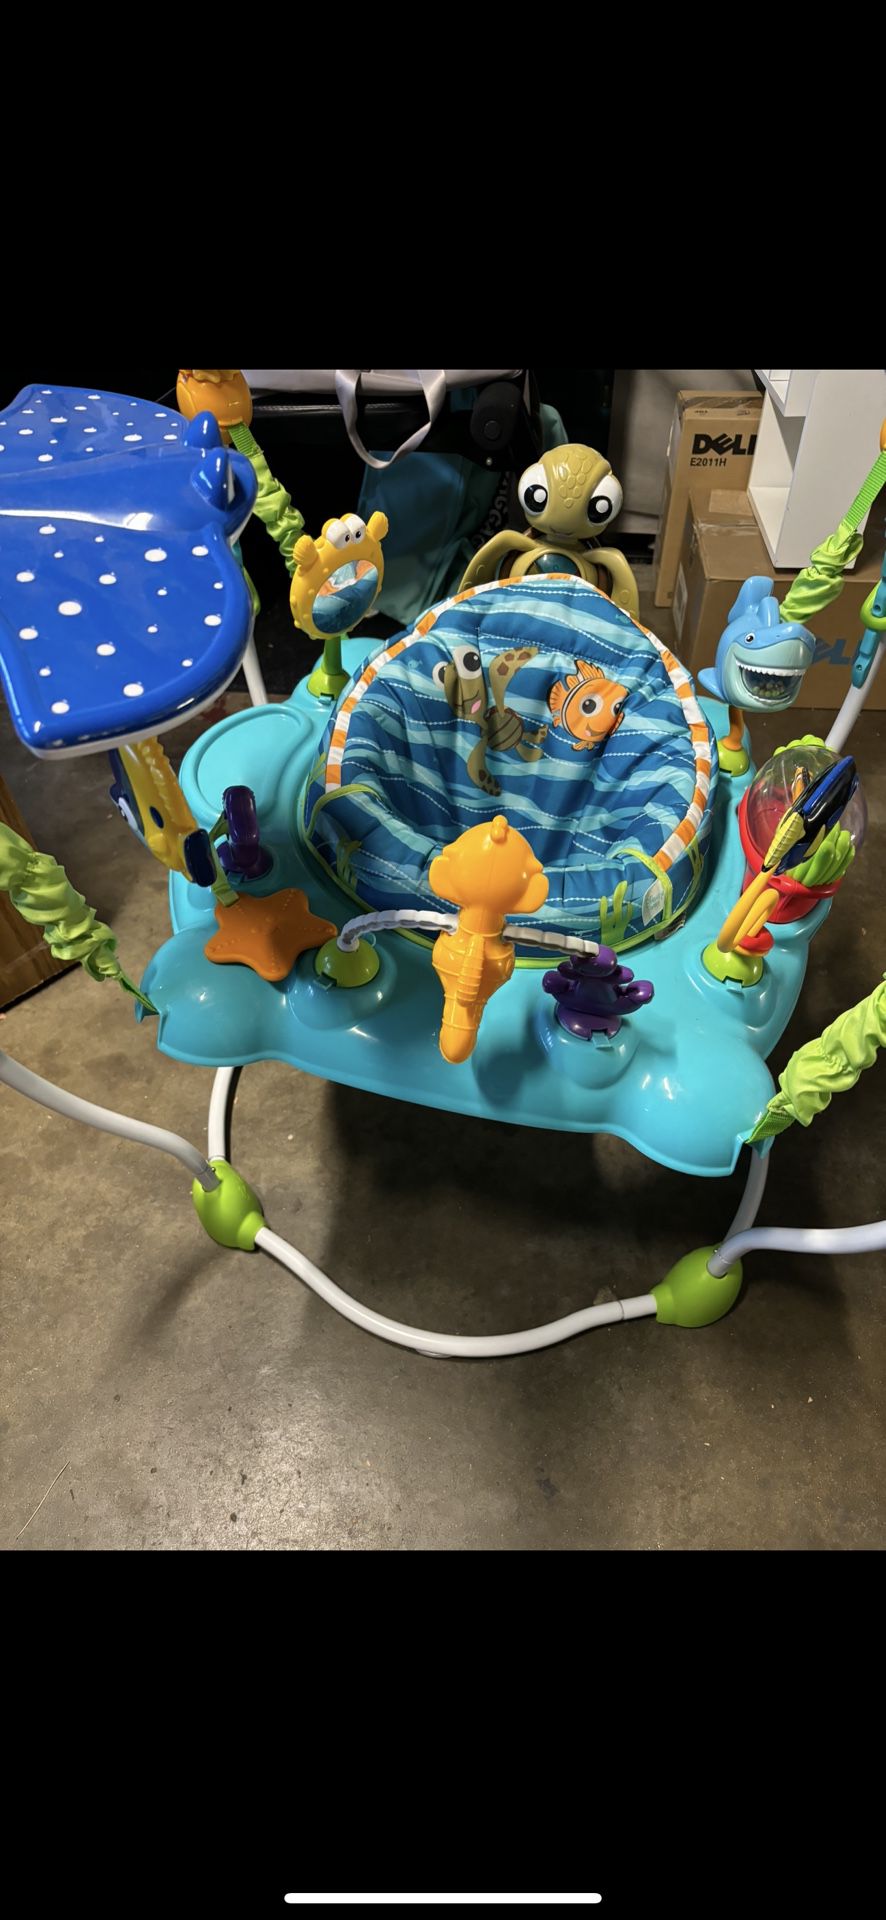 Baby Finding Nemo Bouncer 